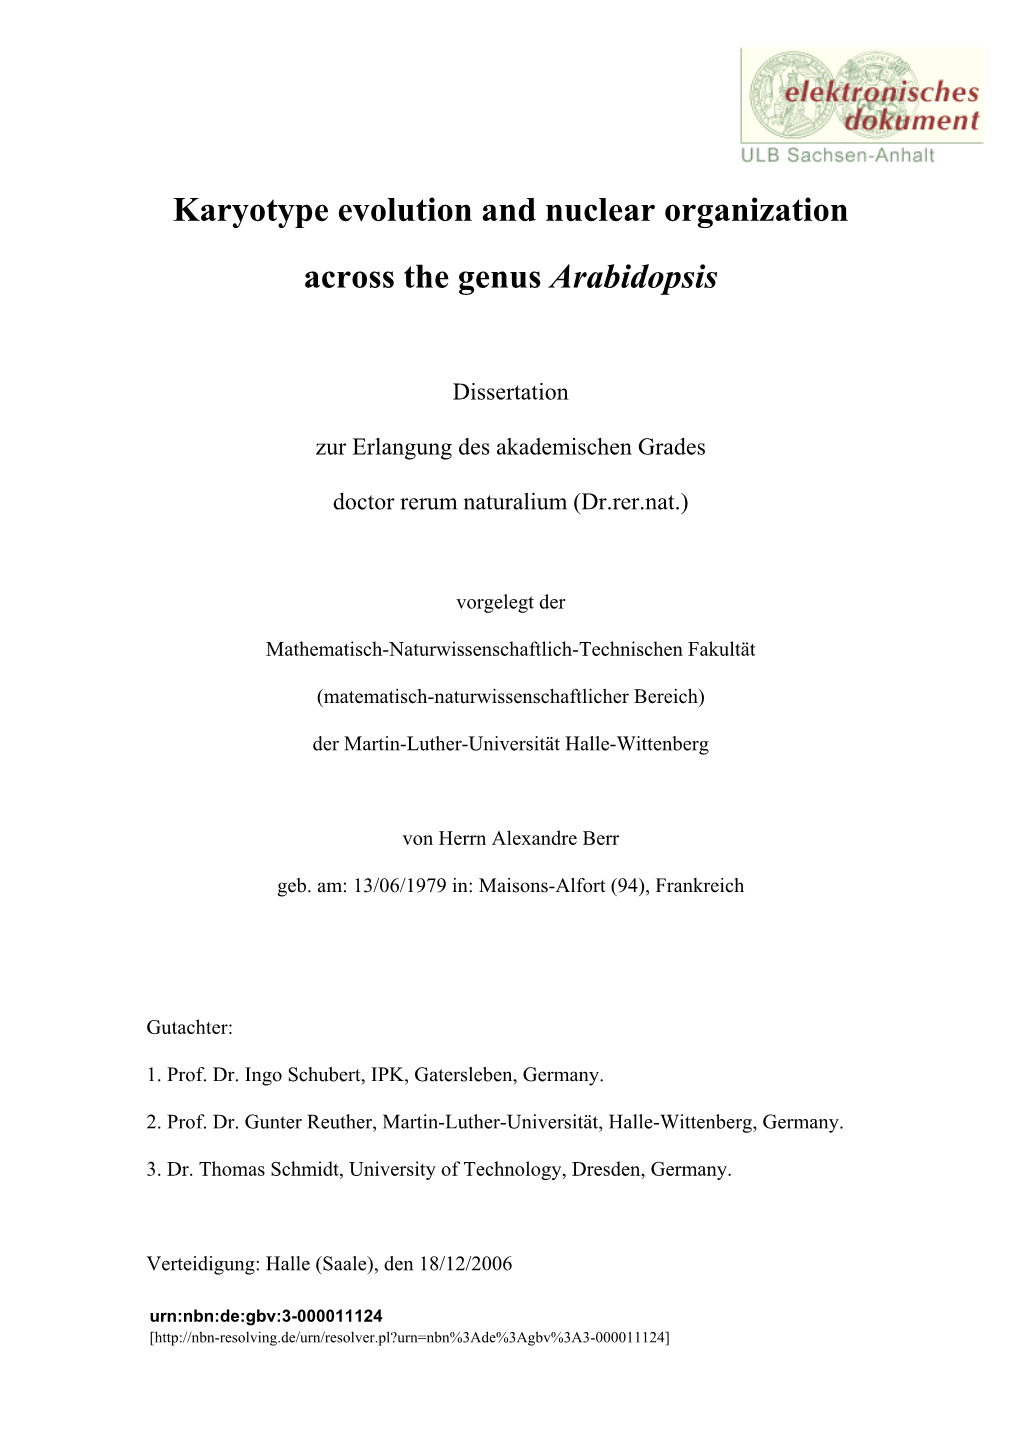 Karyotype Evolution and Nuclear Organization Across the Genus Arabidopsis